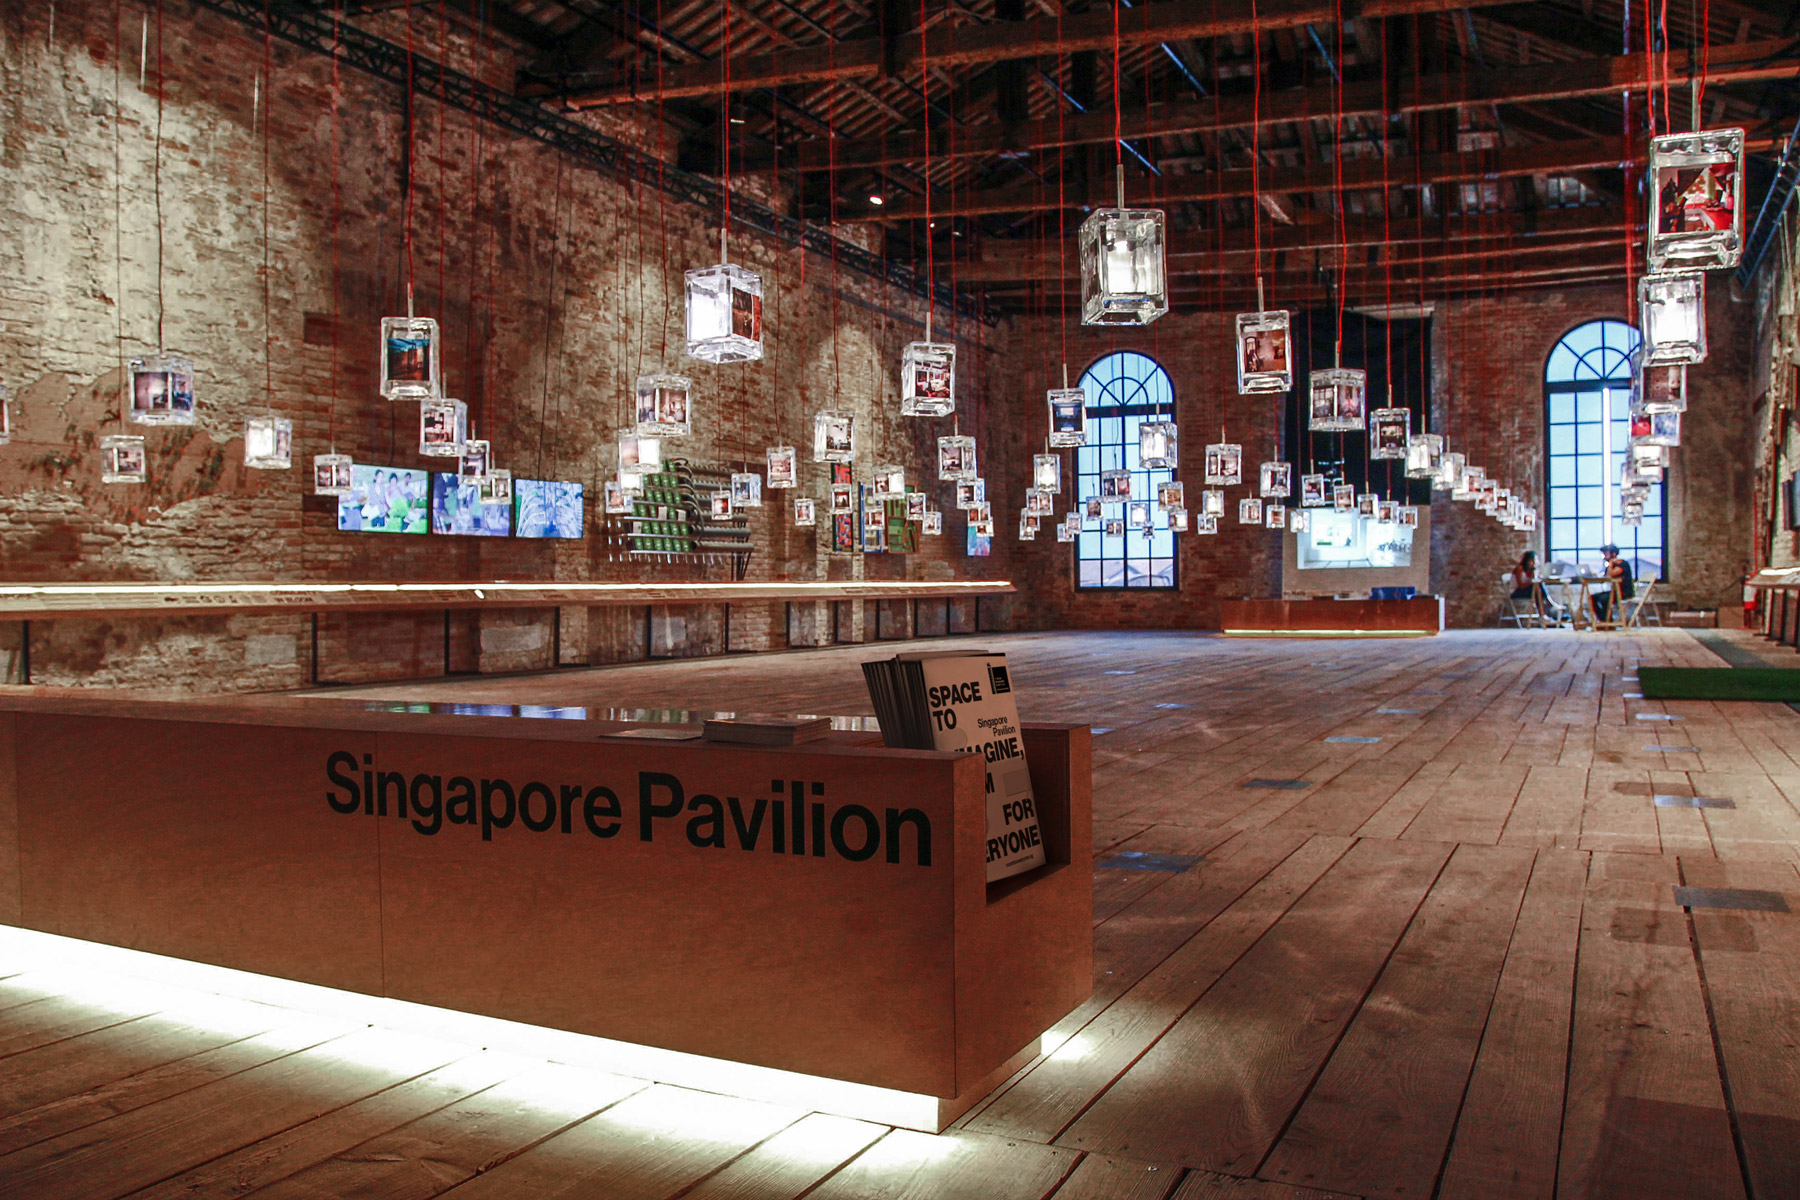 Venice Biennale exhibition design, Image courtesy of Do Not Design